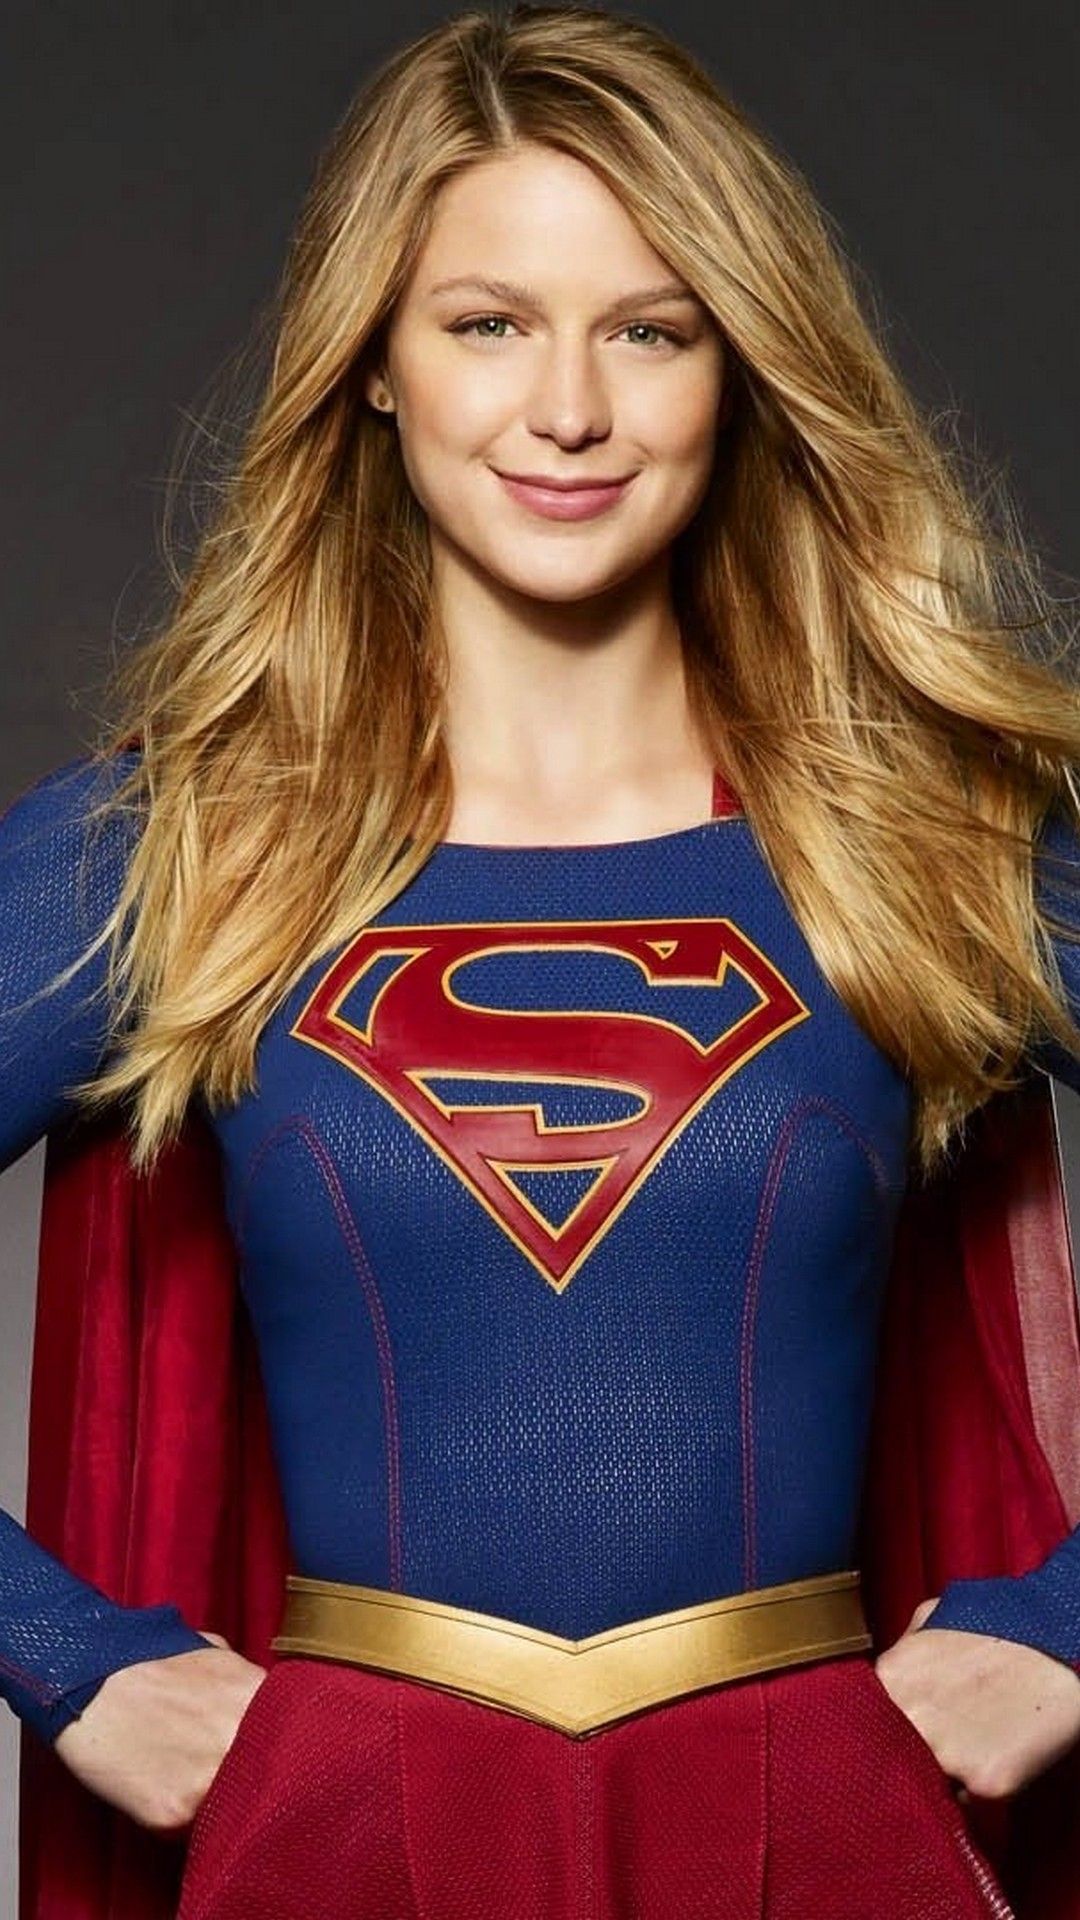 Supergirl Wallpaper iPhone iPhone Wallpaper. Supergirl superman, Melissa supergirl, Kara danvers supergirl